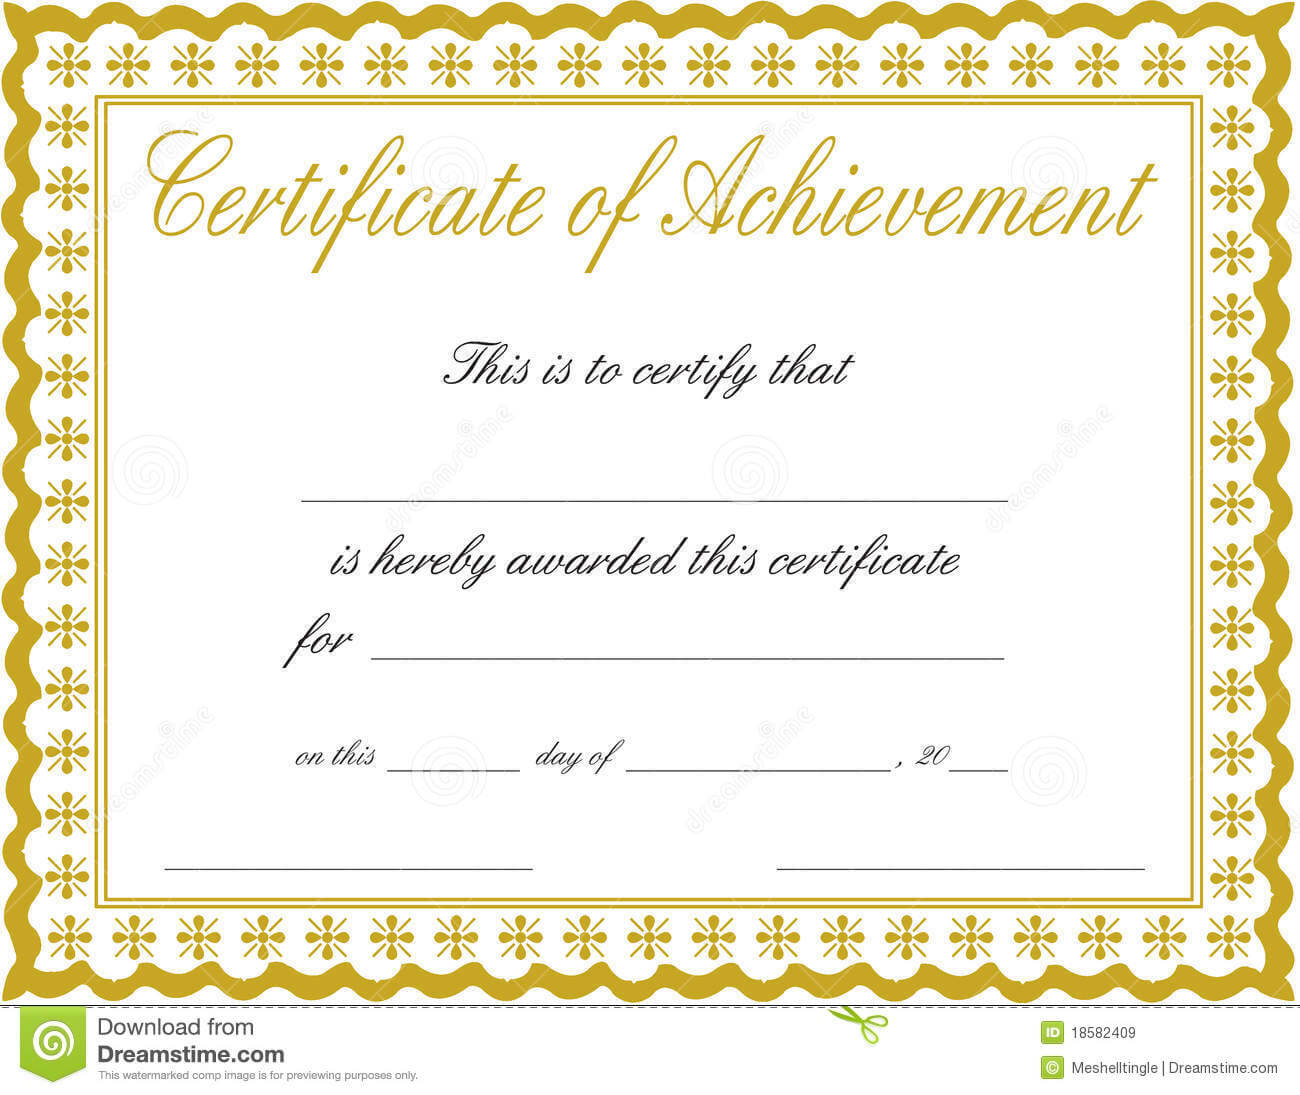 Docx Achievement Certificates Templates Free Certificate Of Throughout Certificate Of Accomplishment Template Free